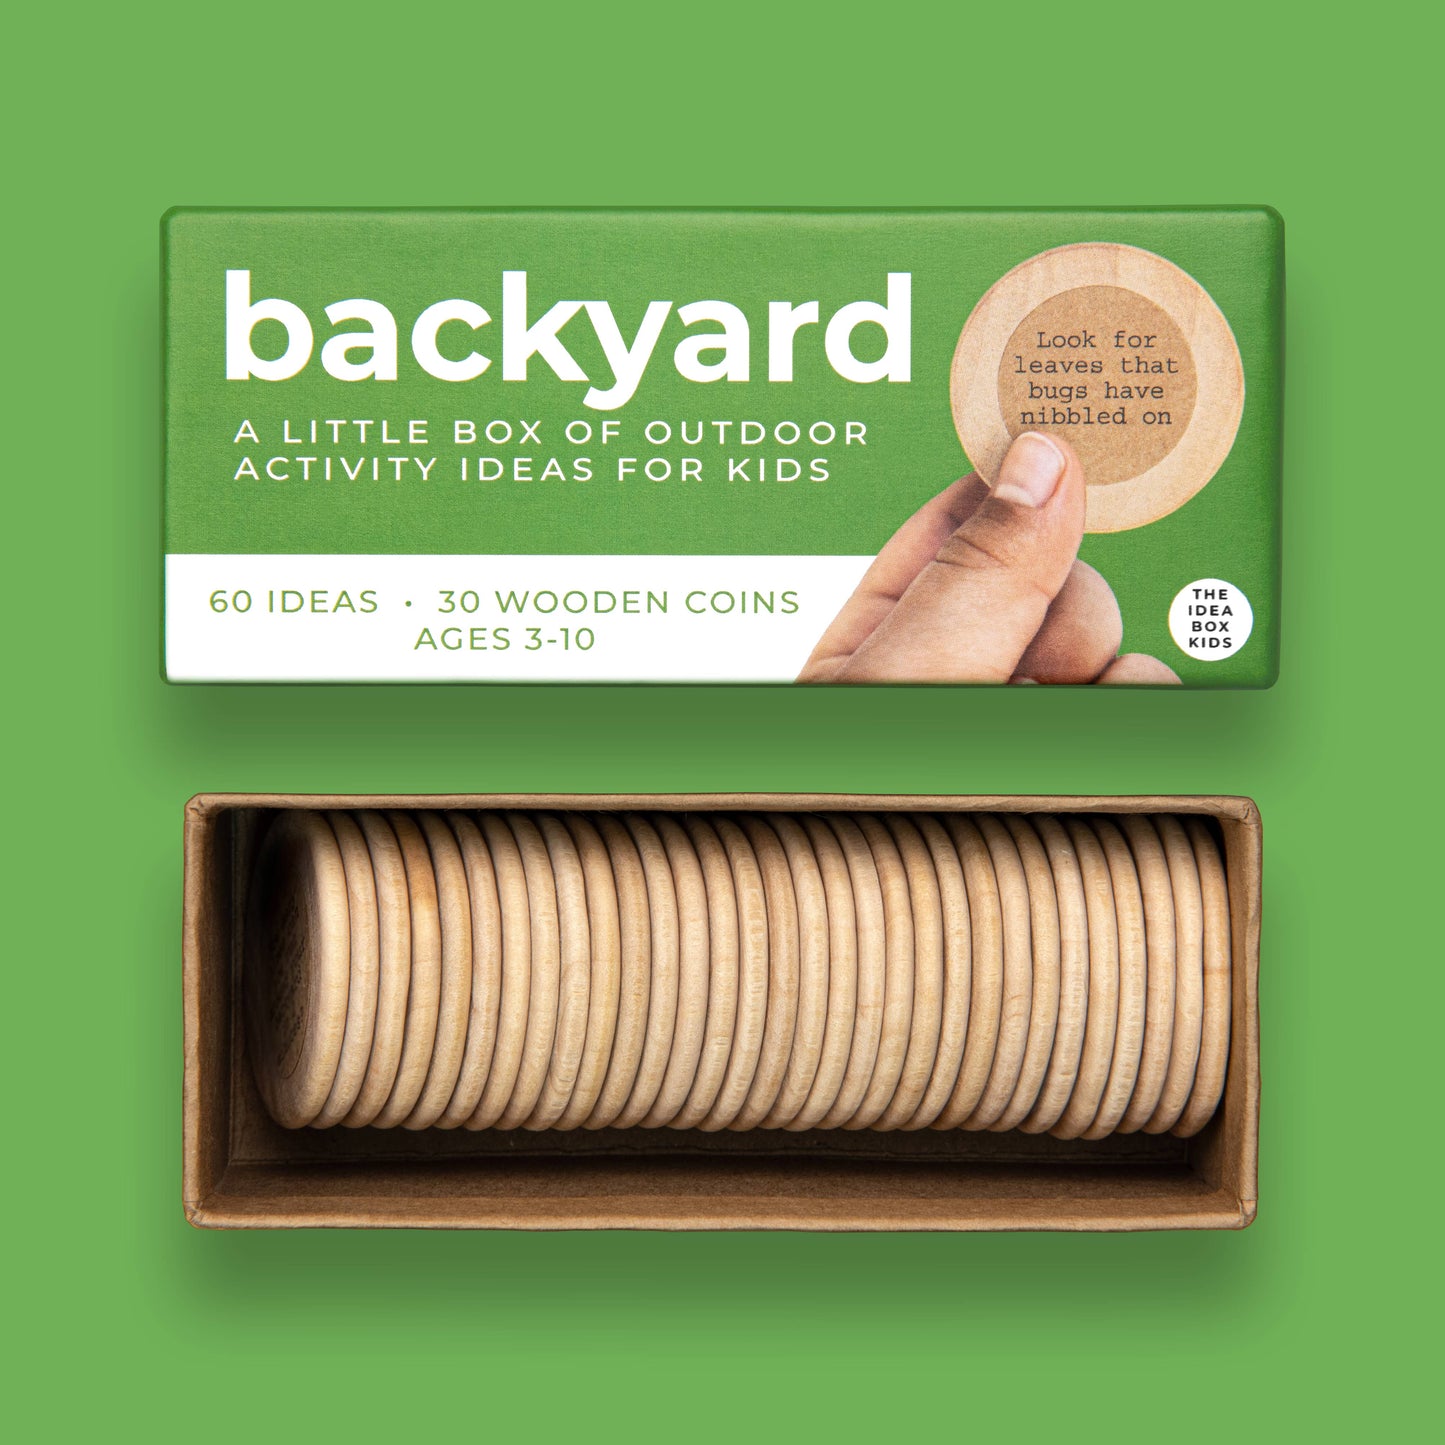 The Idea Box Kids - Backyard - Outdoor Nature Activities for Kids